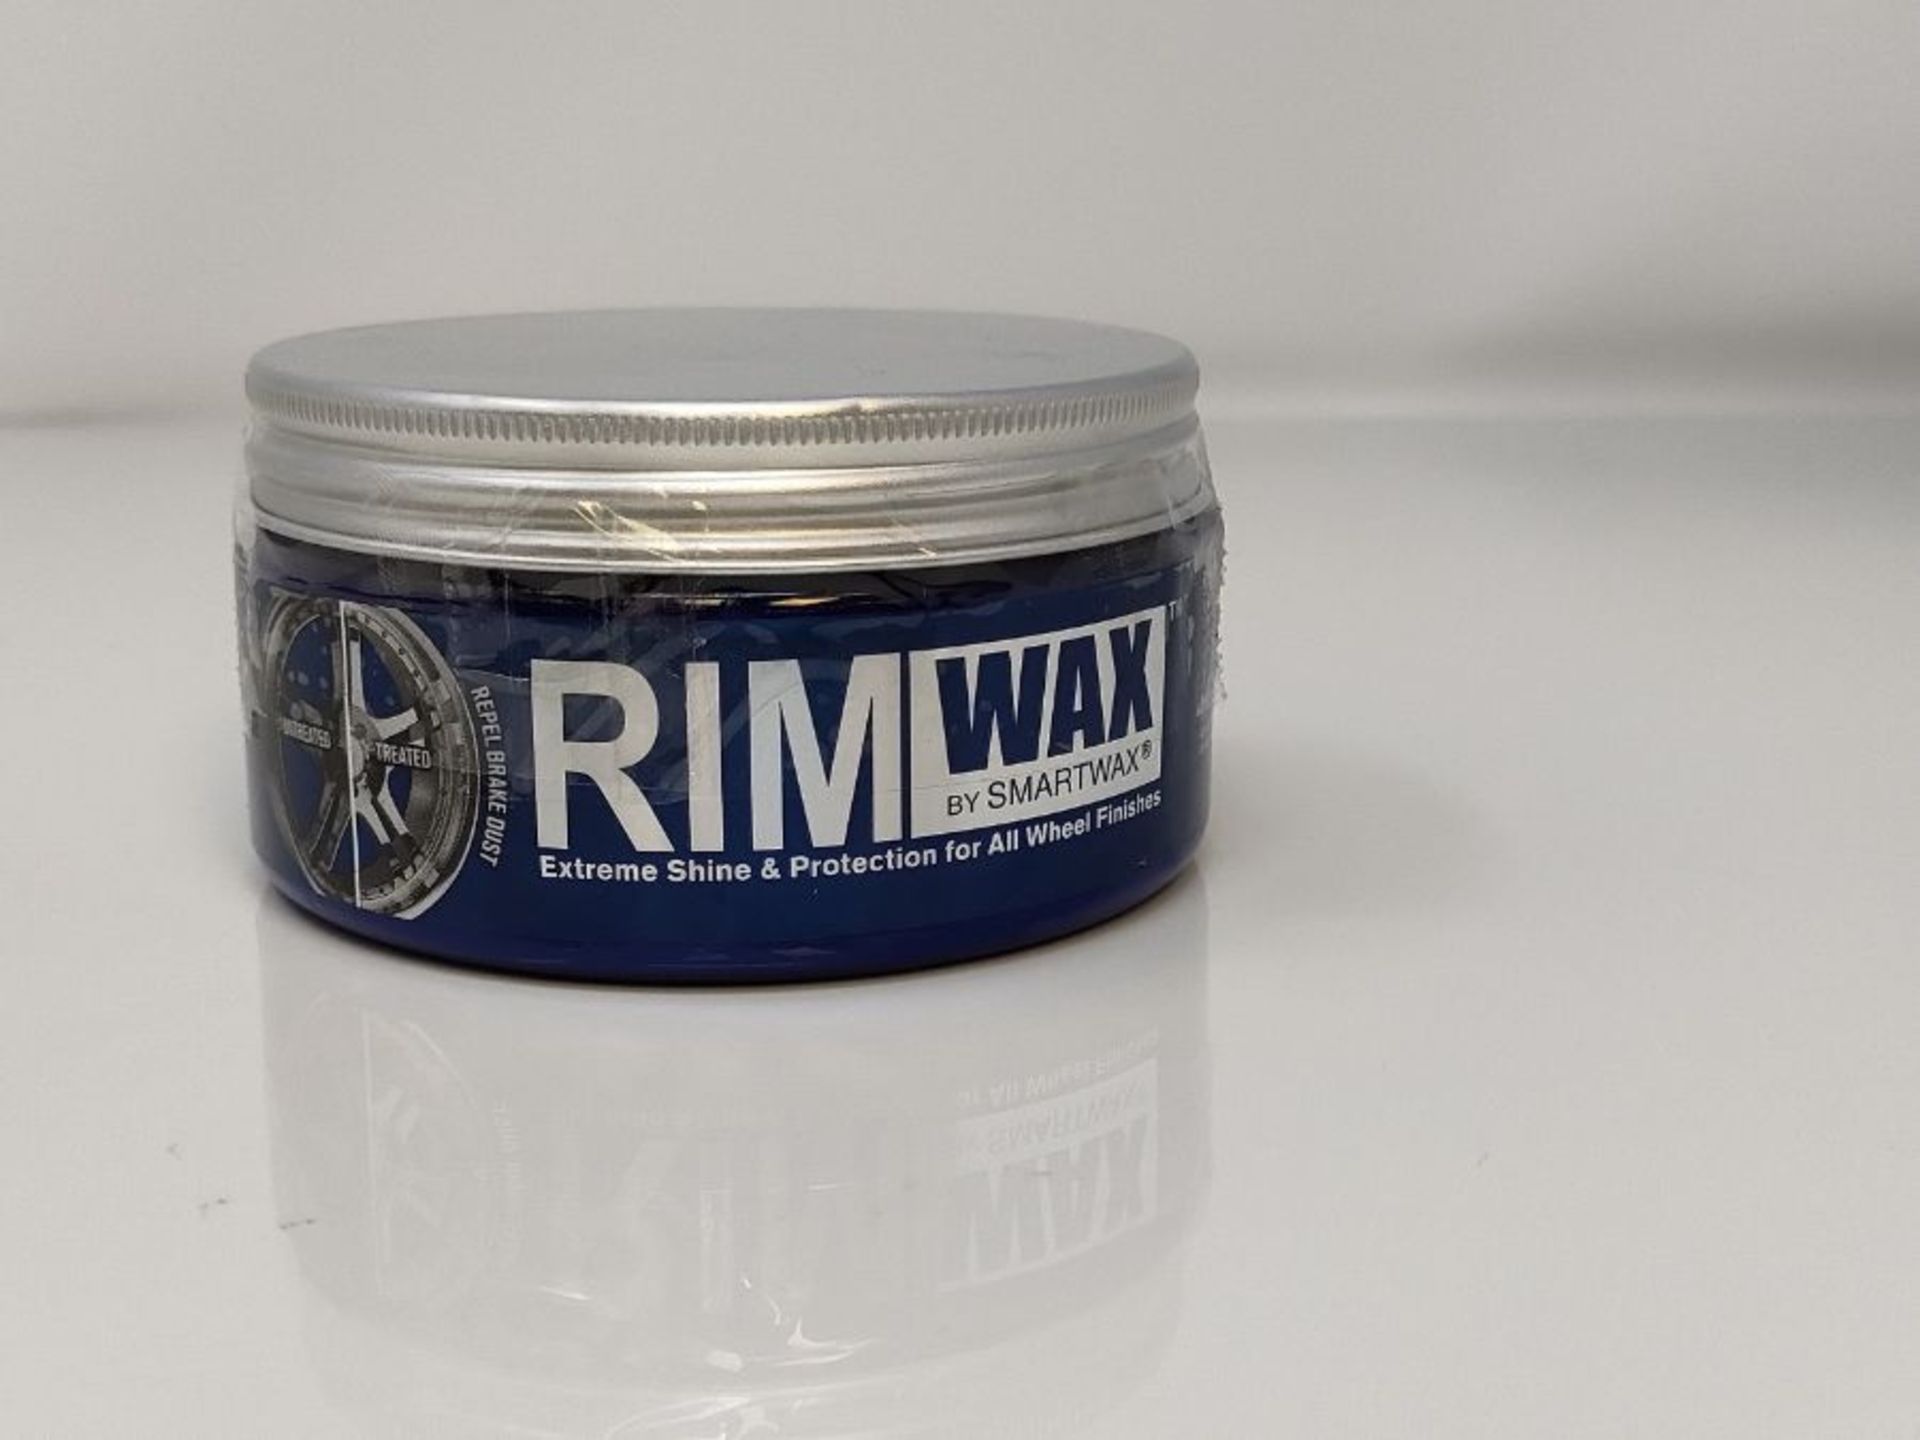 Smartwax 10100 Rim Wax Ultimate Shine and Protection - 8 oz - Image 2 of 3